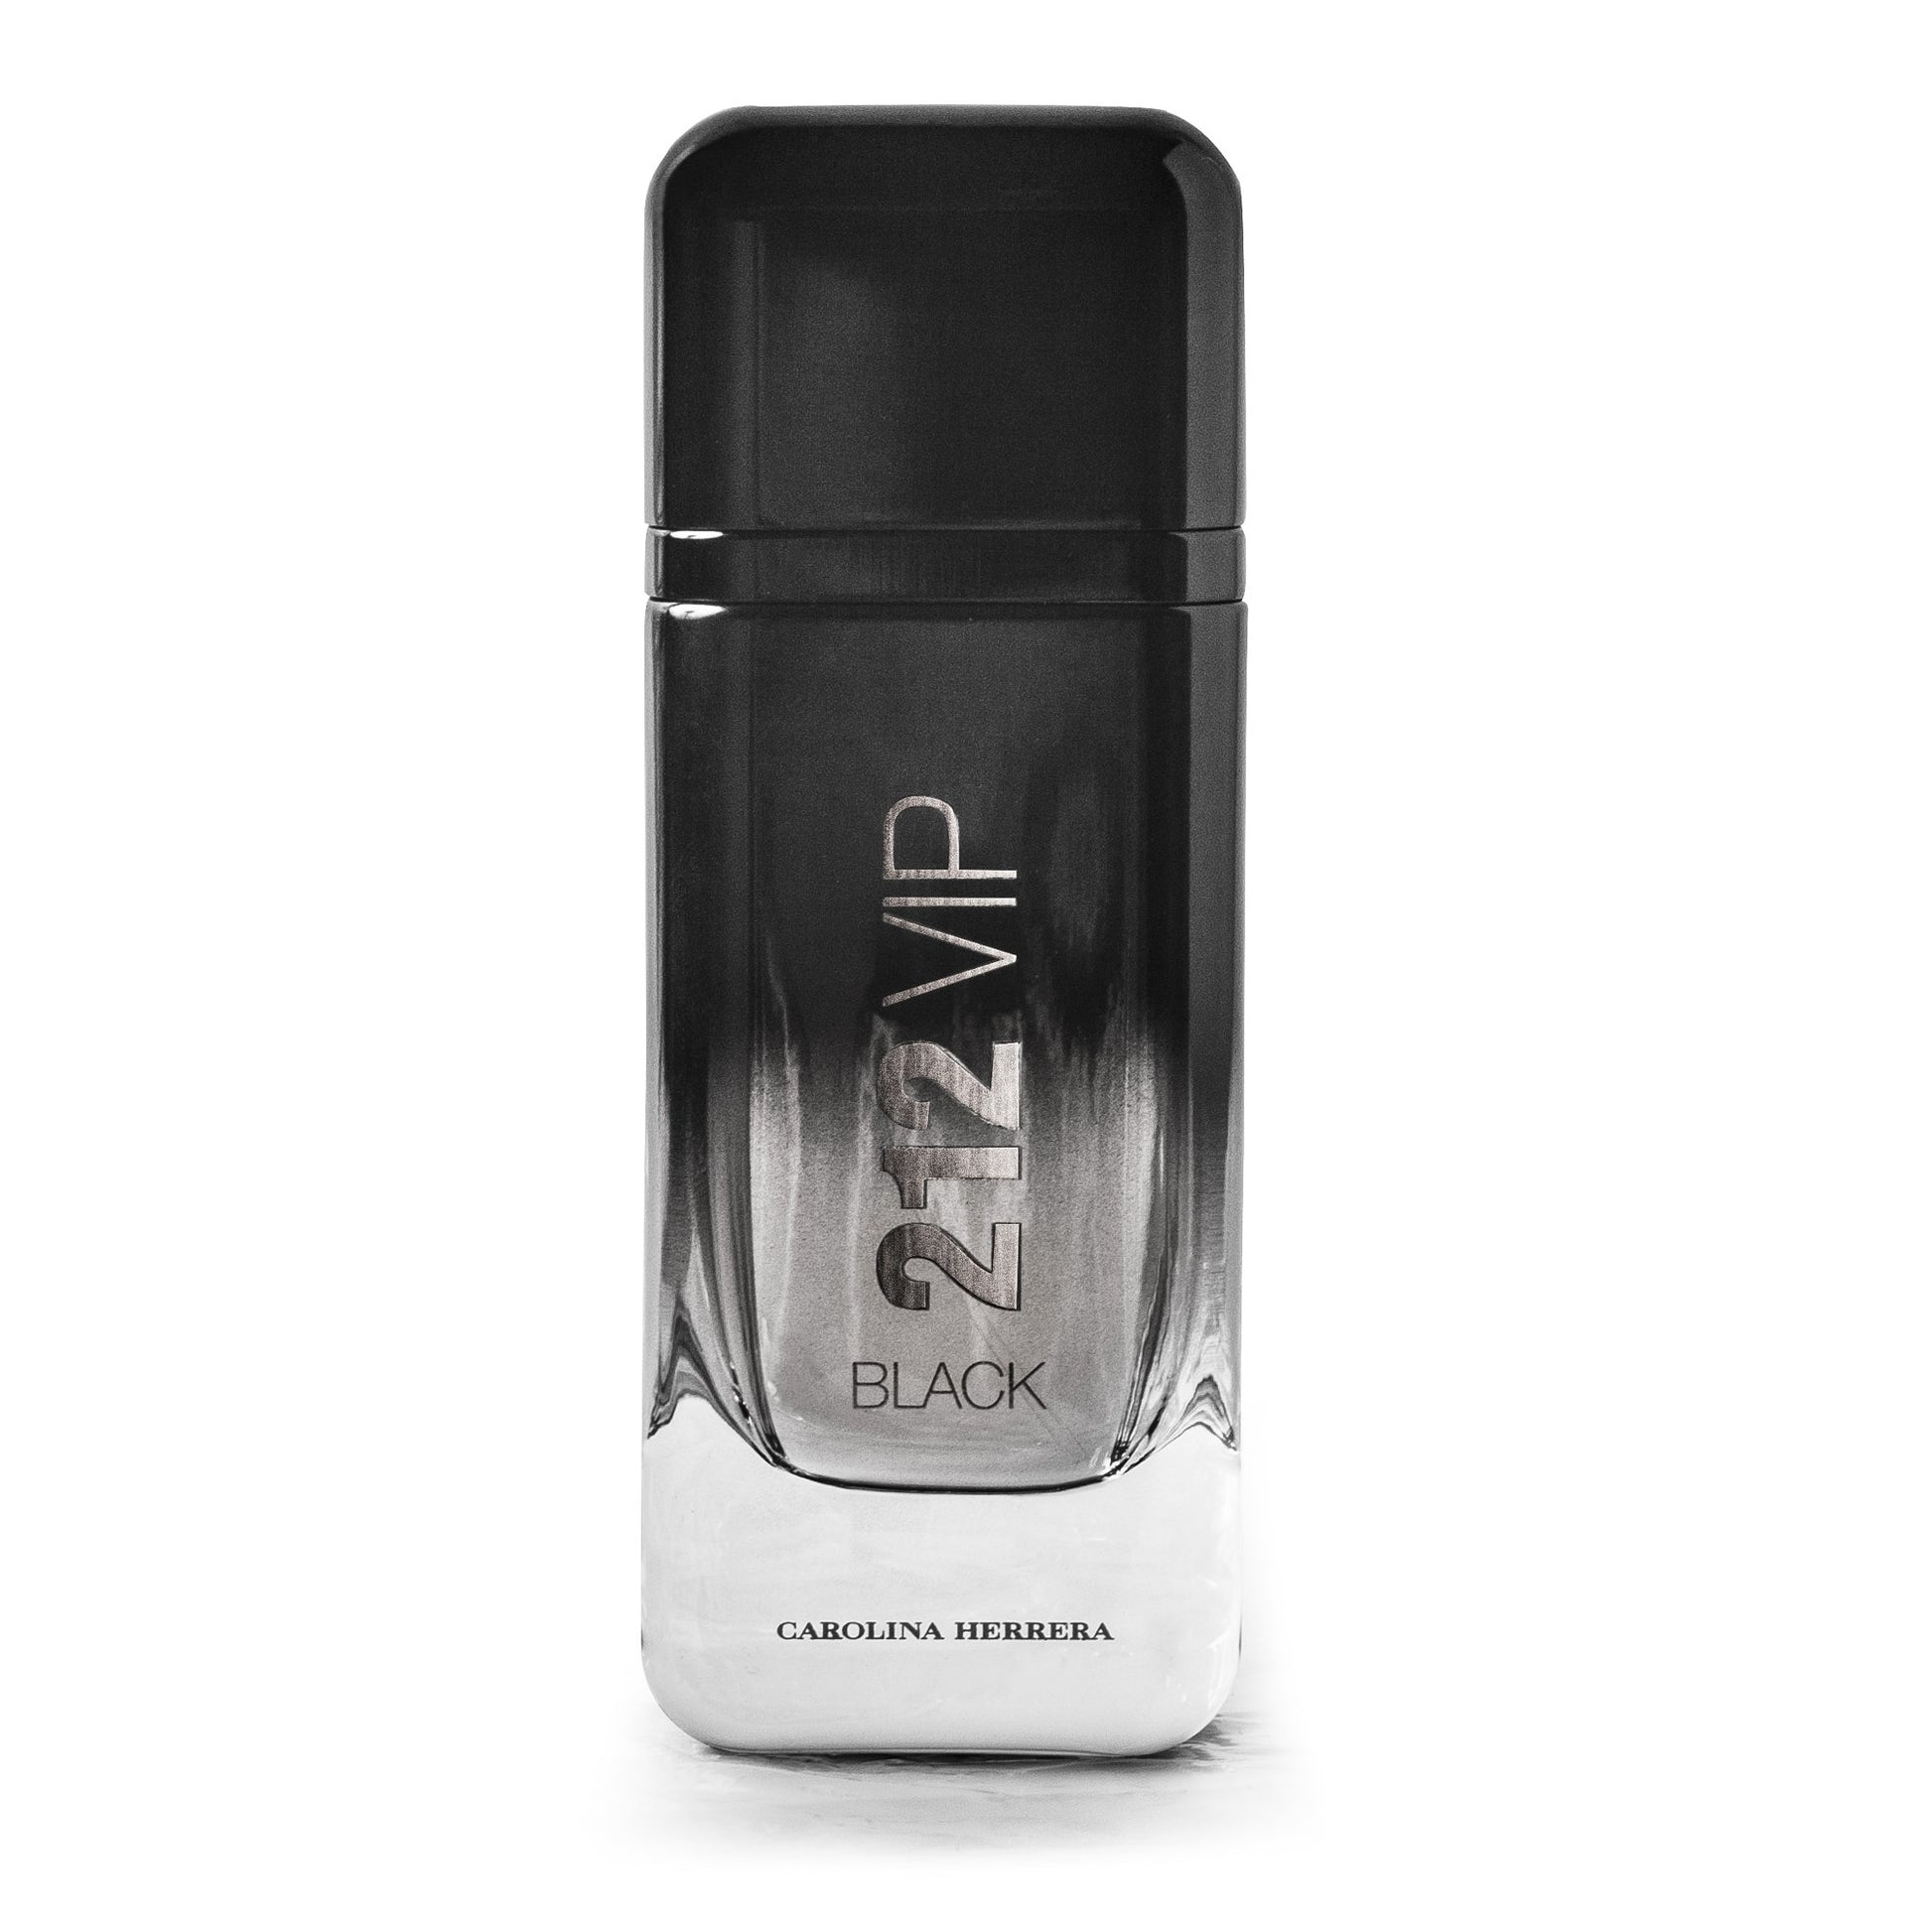 212 Vip Black Eau de Parfum Spray for Men by Carolina Herrera, Product image 2